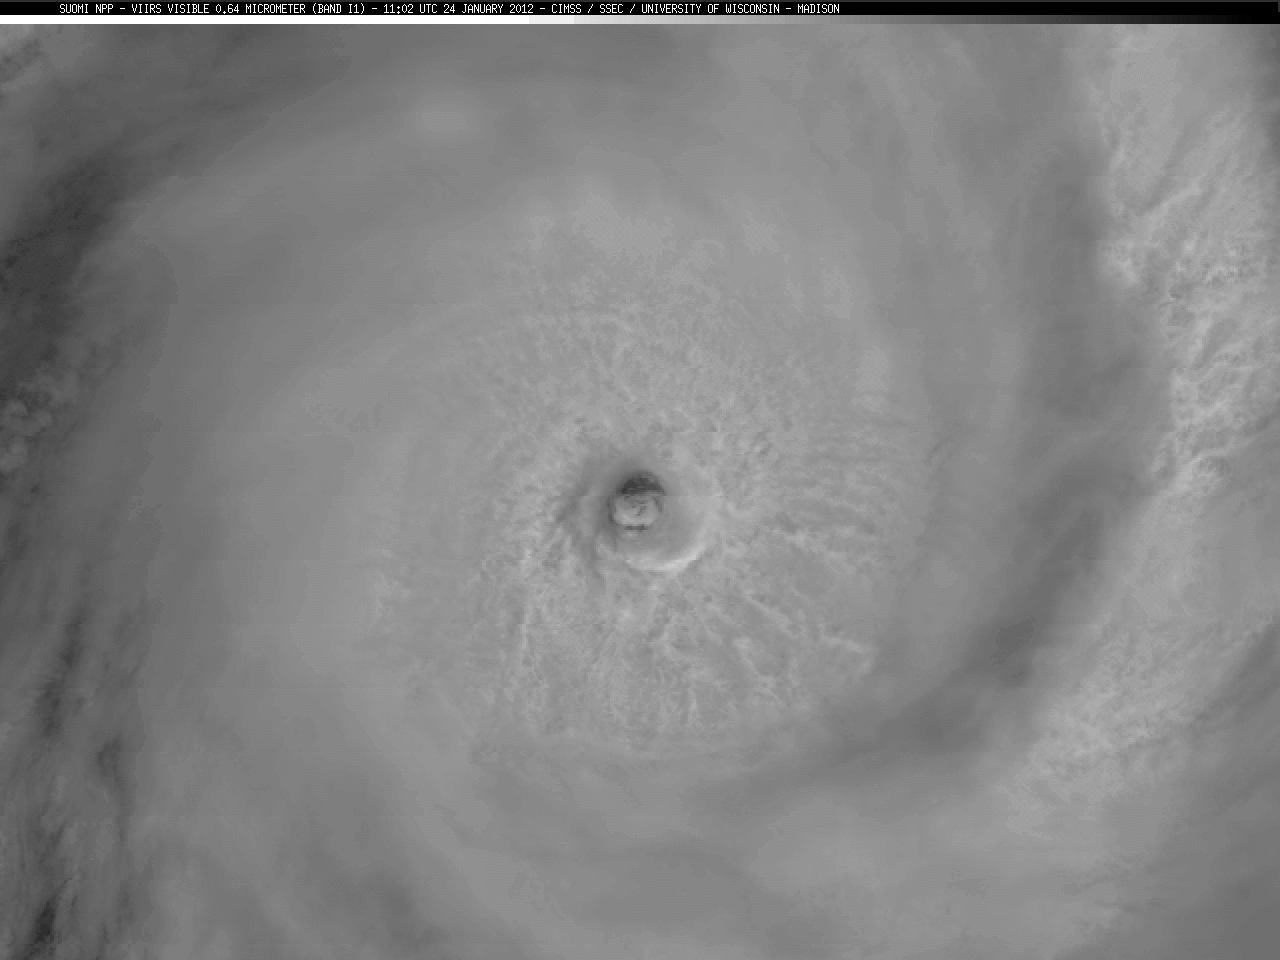 Suomi NPP VIIRS 0.64 Âµm visible + 11.45 Âµm IR images (Tropical Cyclone Funso)